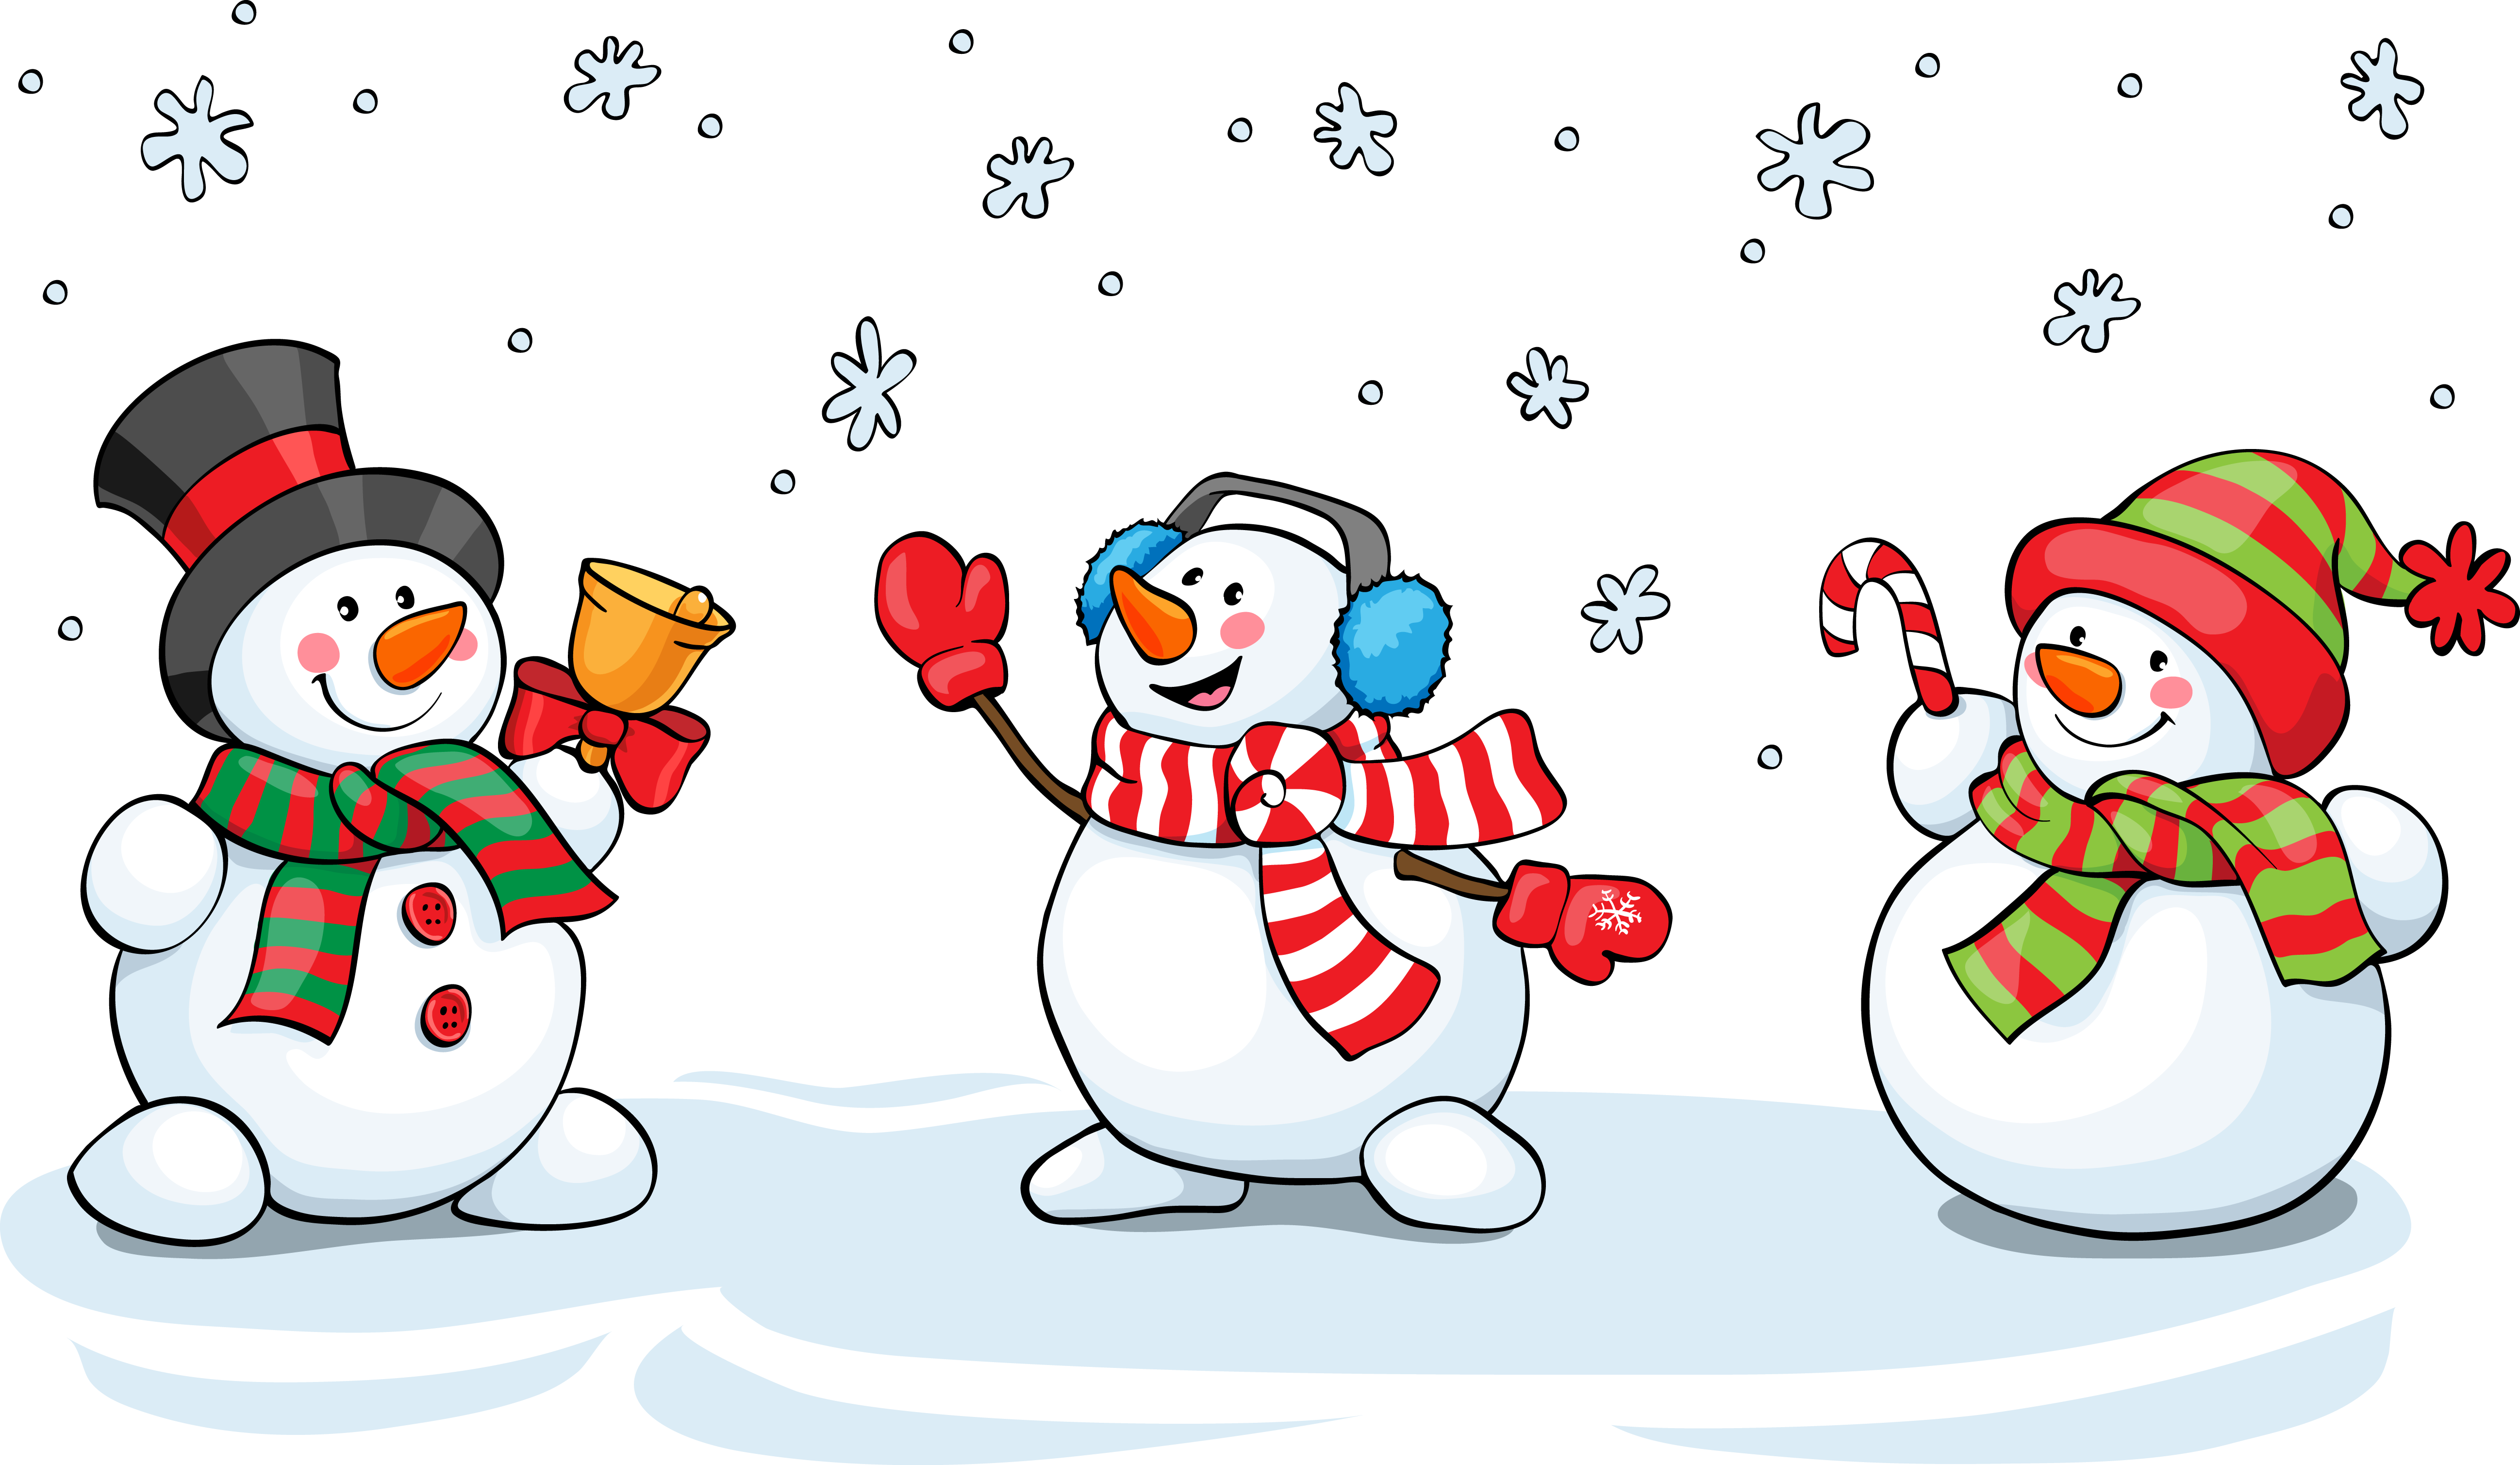 Download Snowman Claus Christmas Santa Download Free Image Hq Png Image Freepngimg